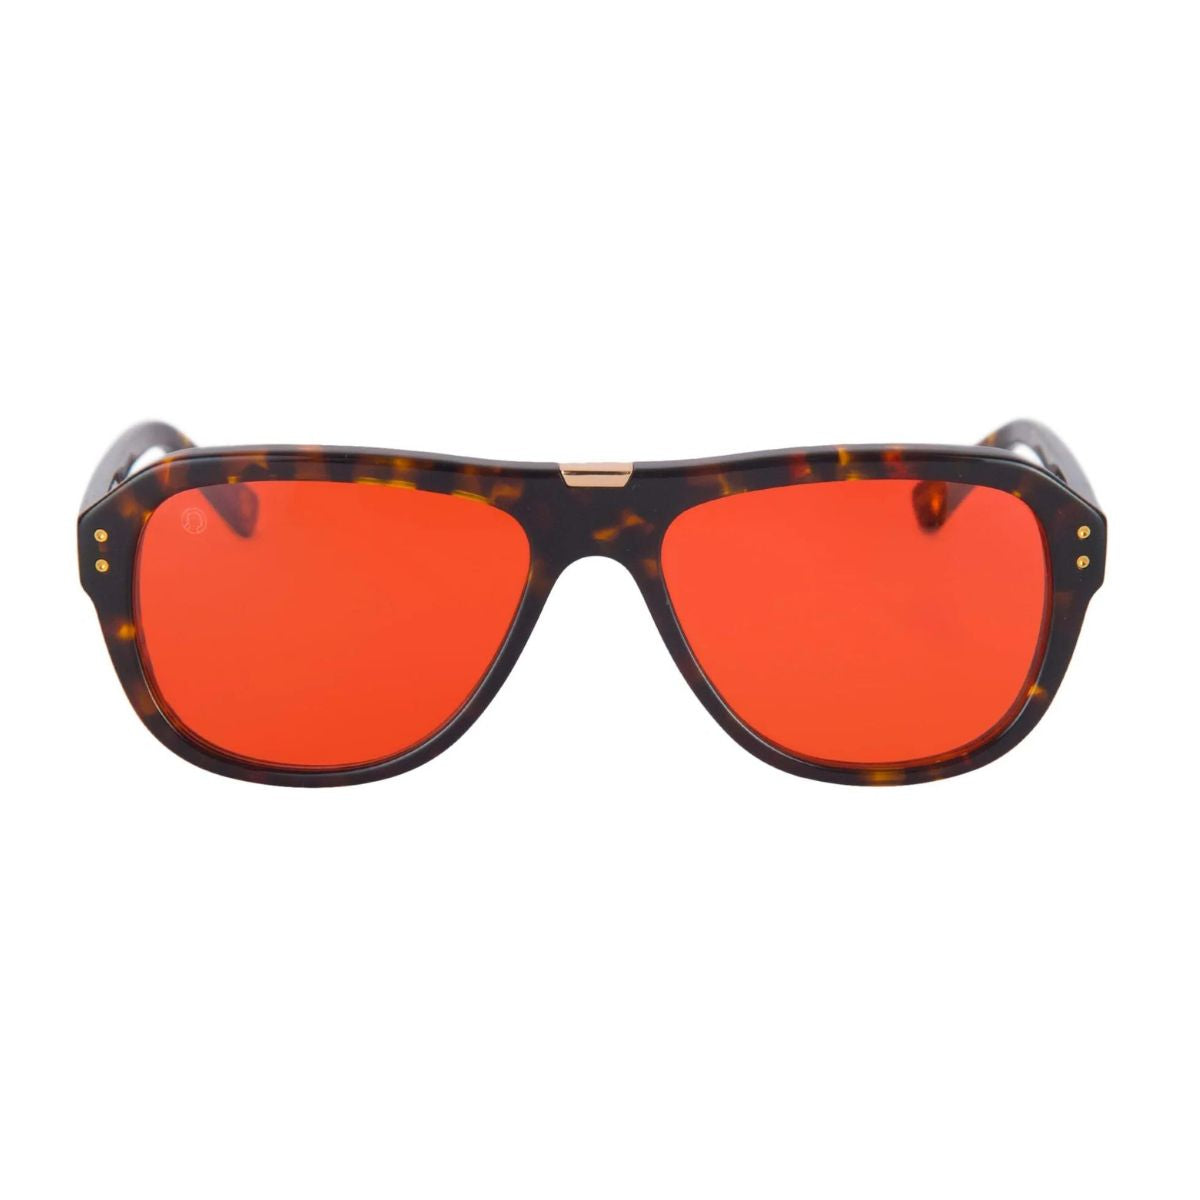 " Buy The Monk Philosopher C2 UV Protection Sunglasses For Unisex At Optorium"